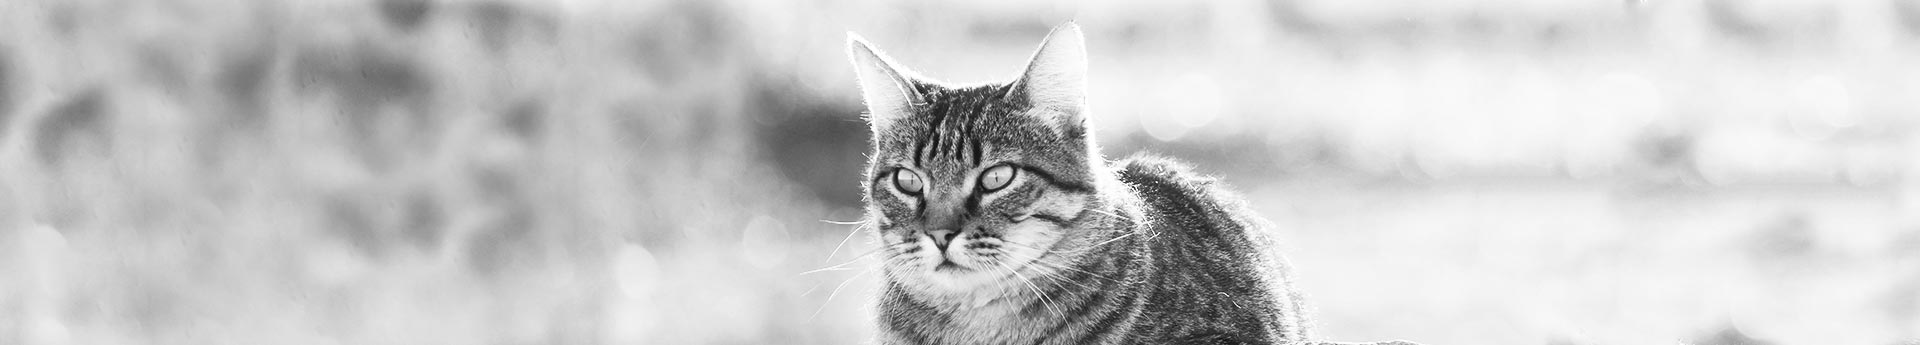 ORIJEN Tundra Dry Cat Food - Striped cat staring intently - Dante in Shelly, Idaho